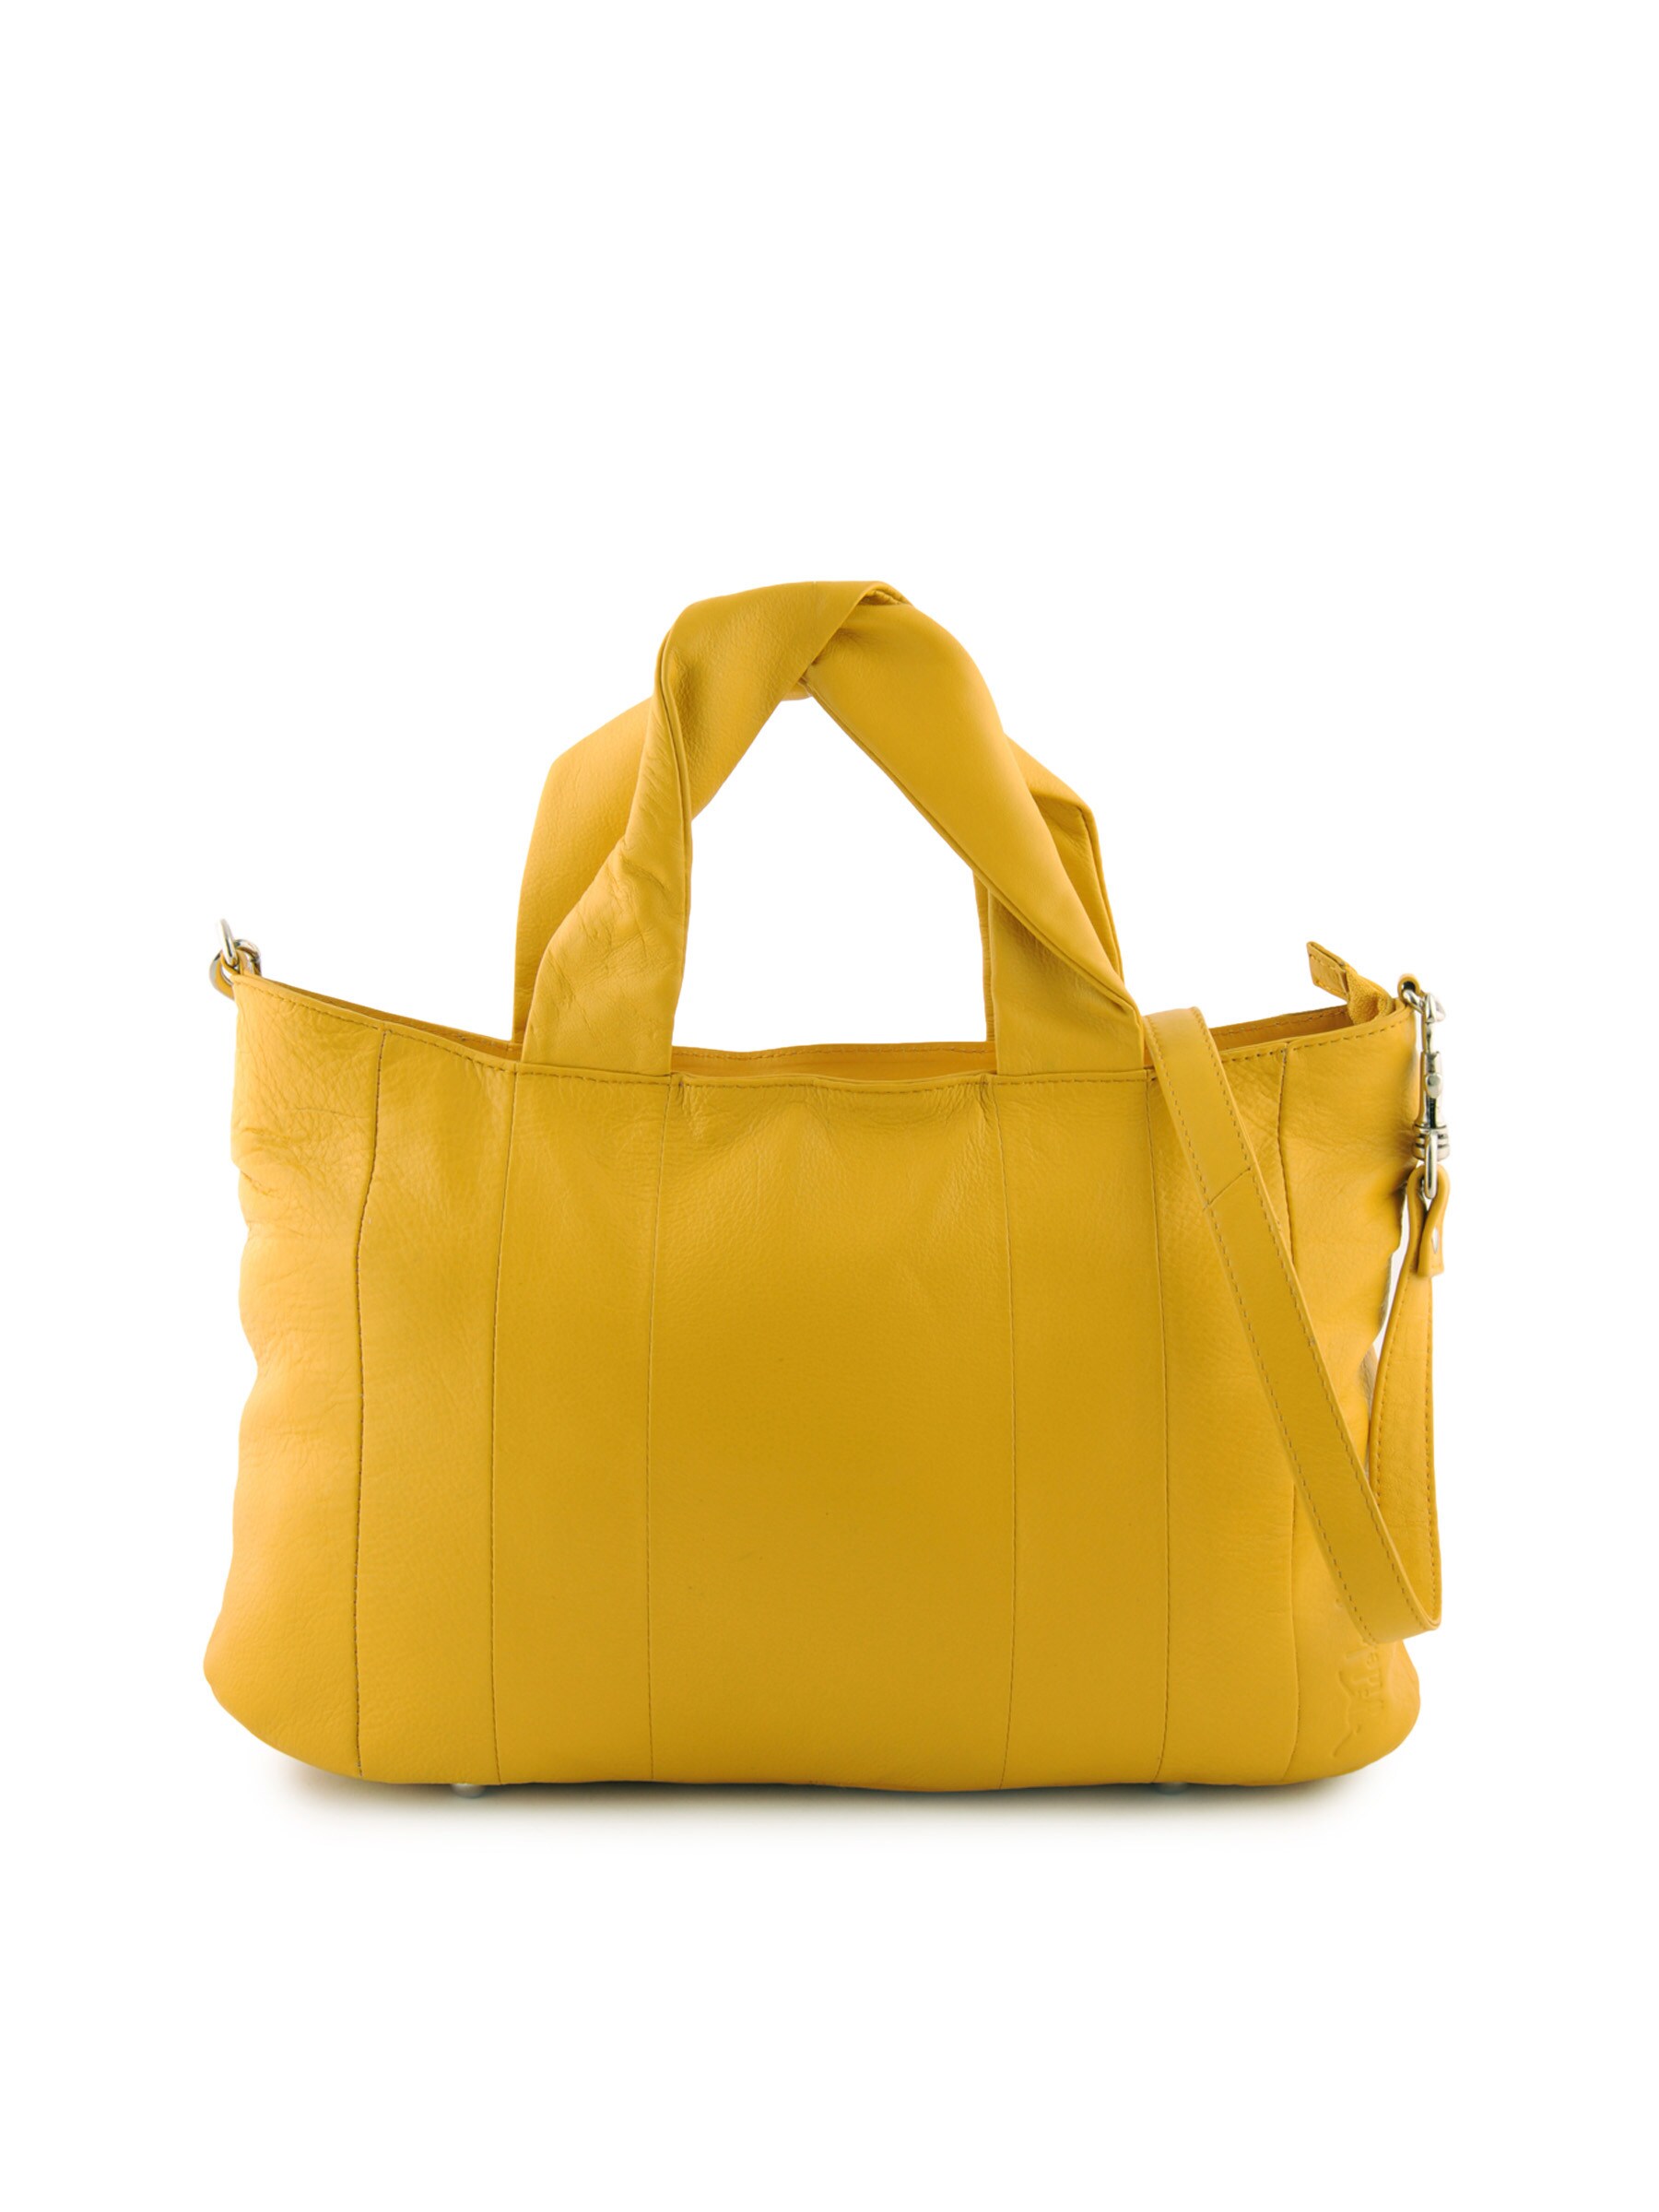 Hidekraft Women Leather Yellow Handbags